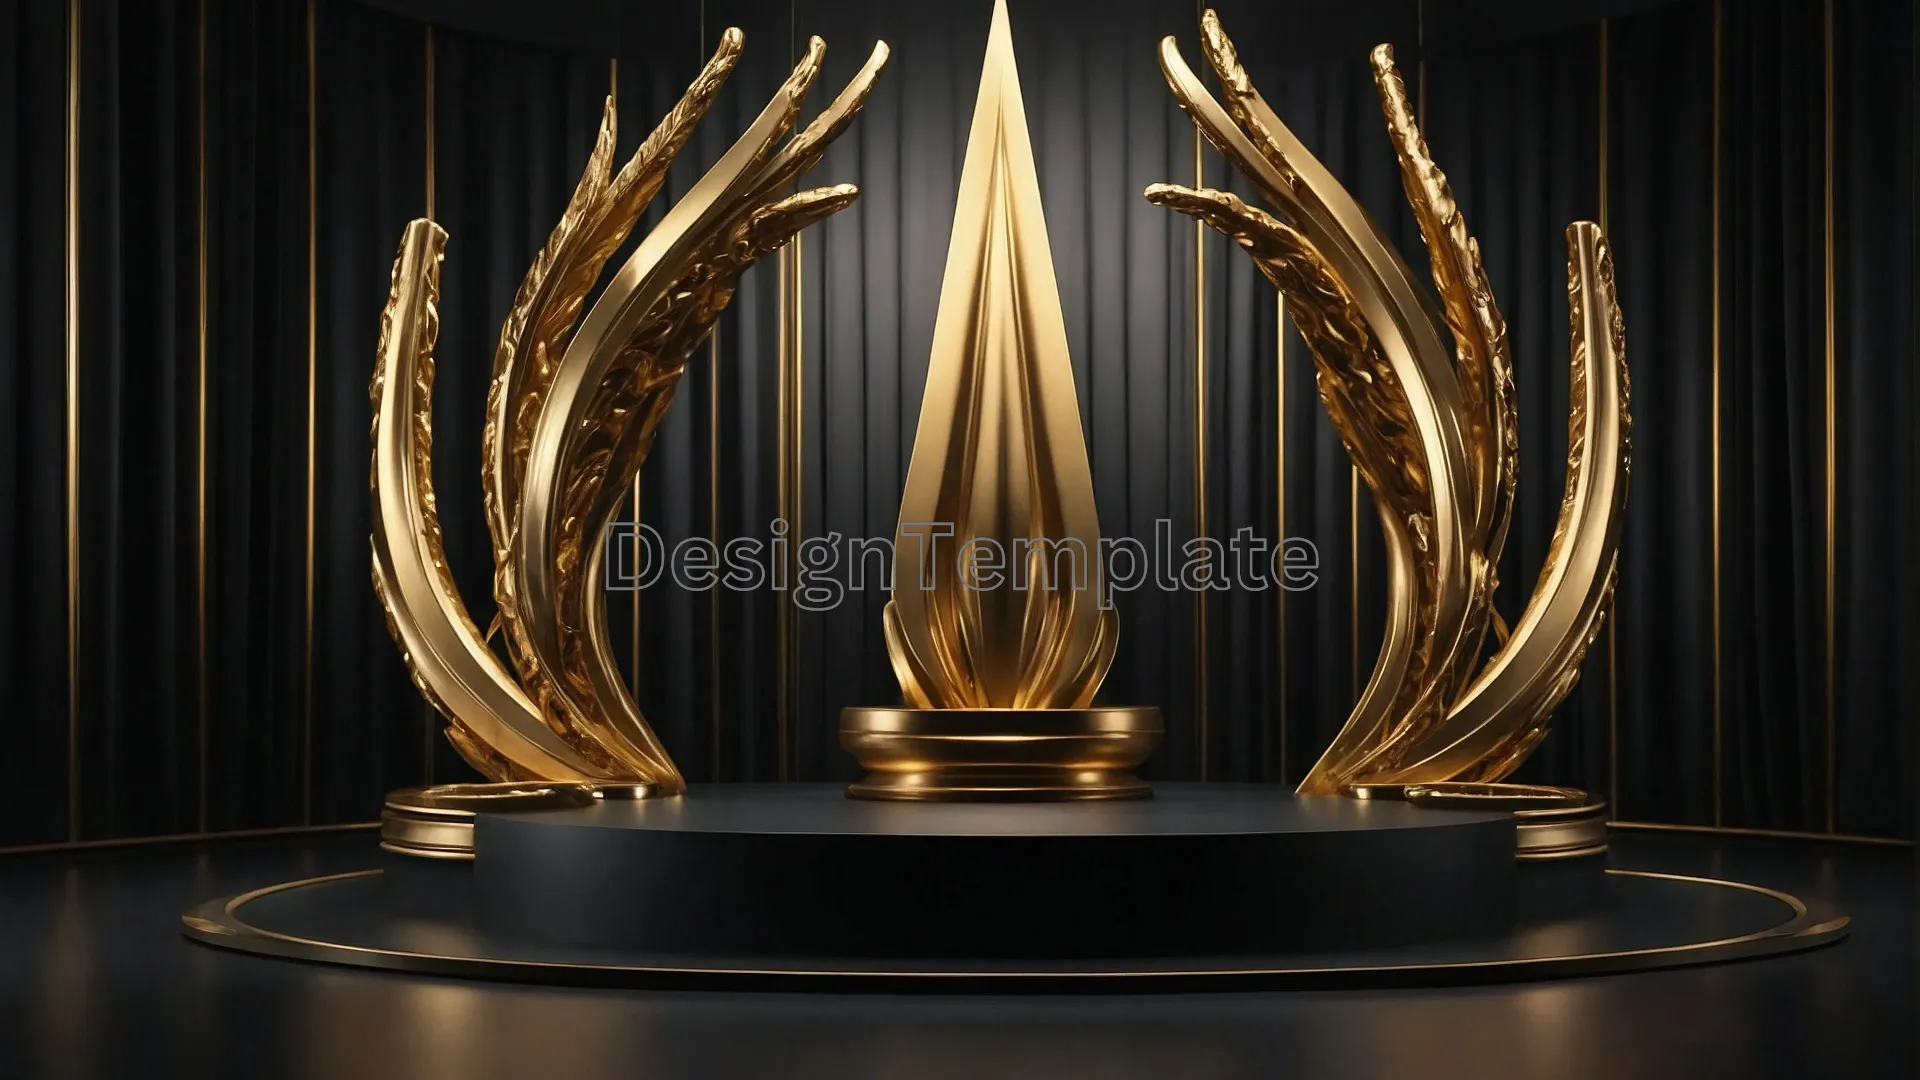 Luxurious Award Show Podium with Golden Background image